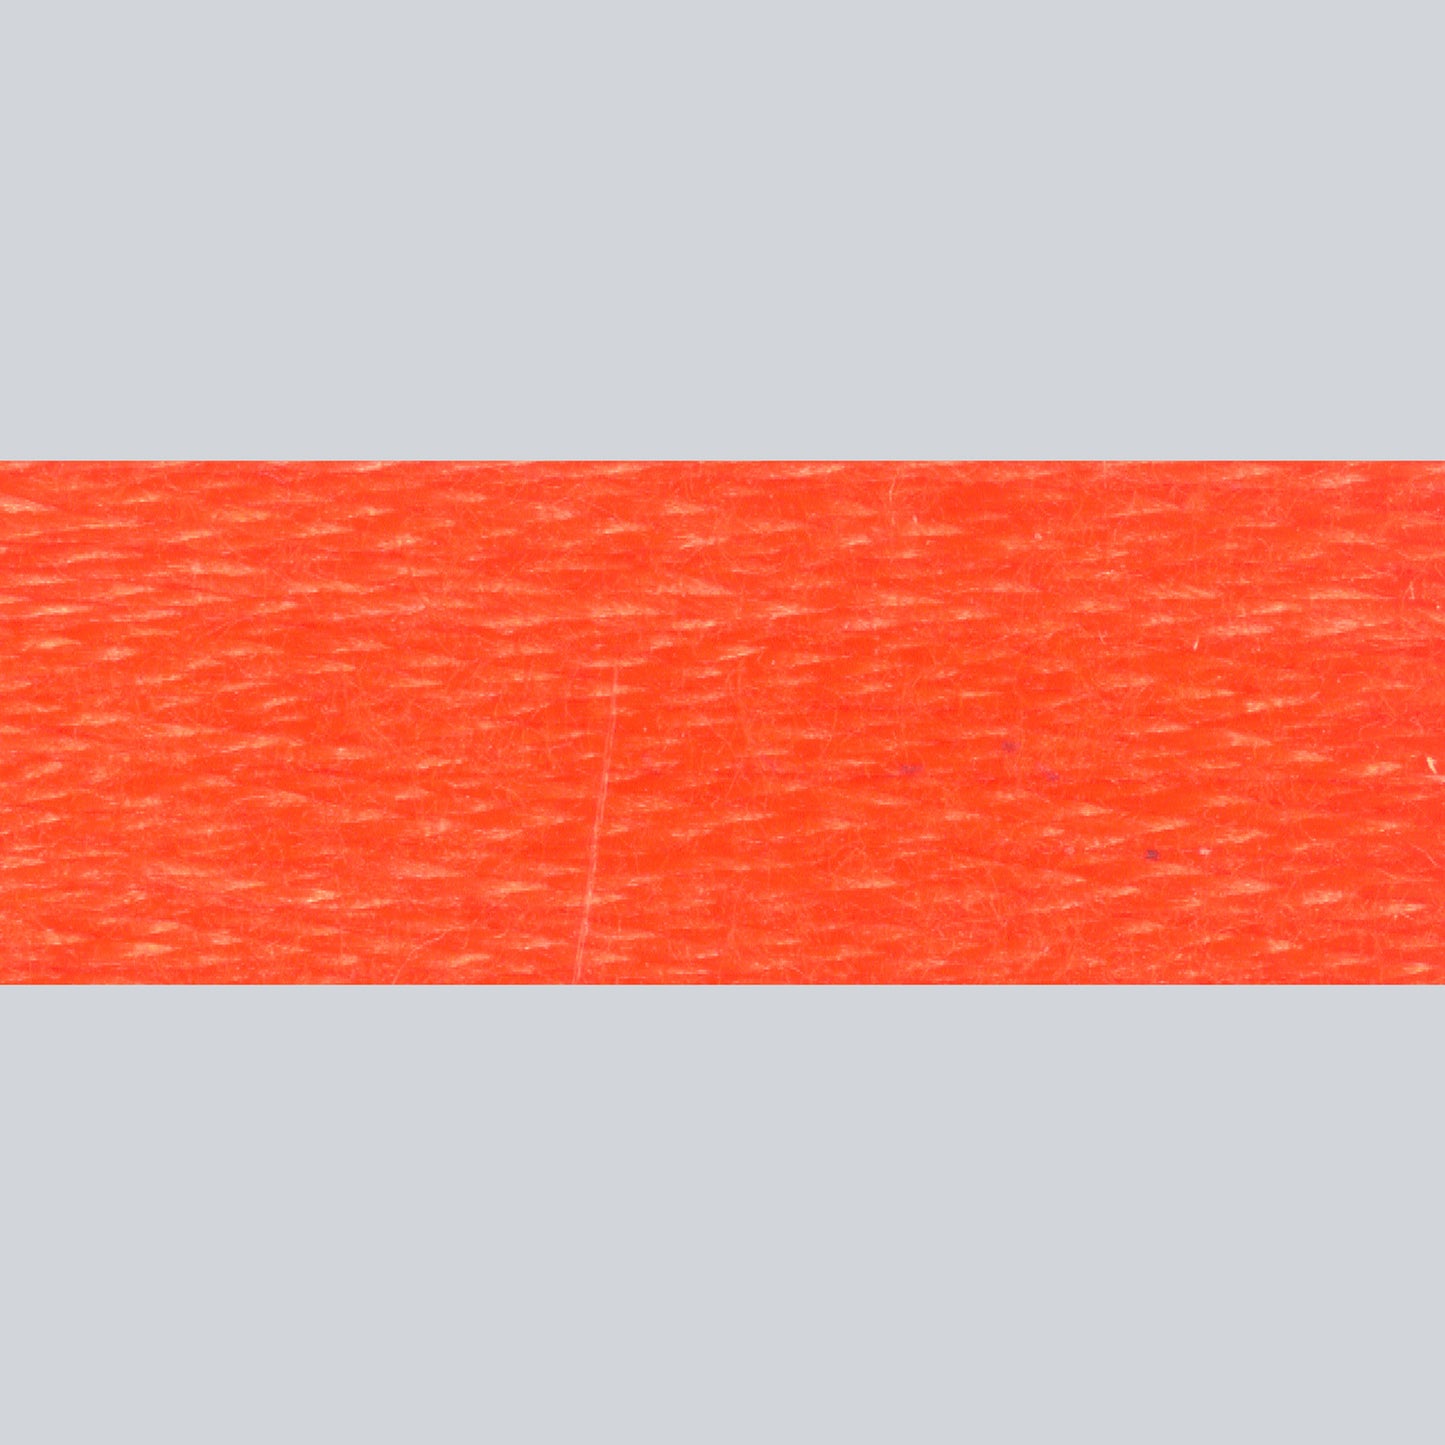 DMC Embroidery Floss - 608 Bright Orange Alternative View #1